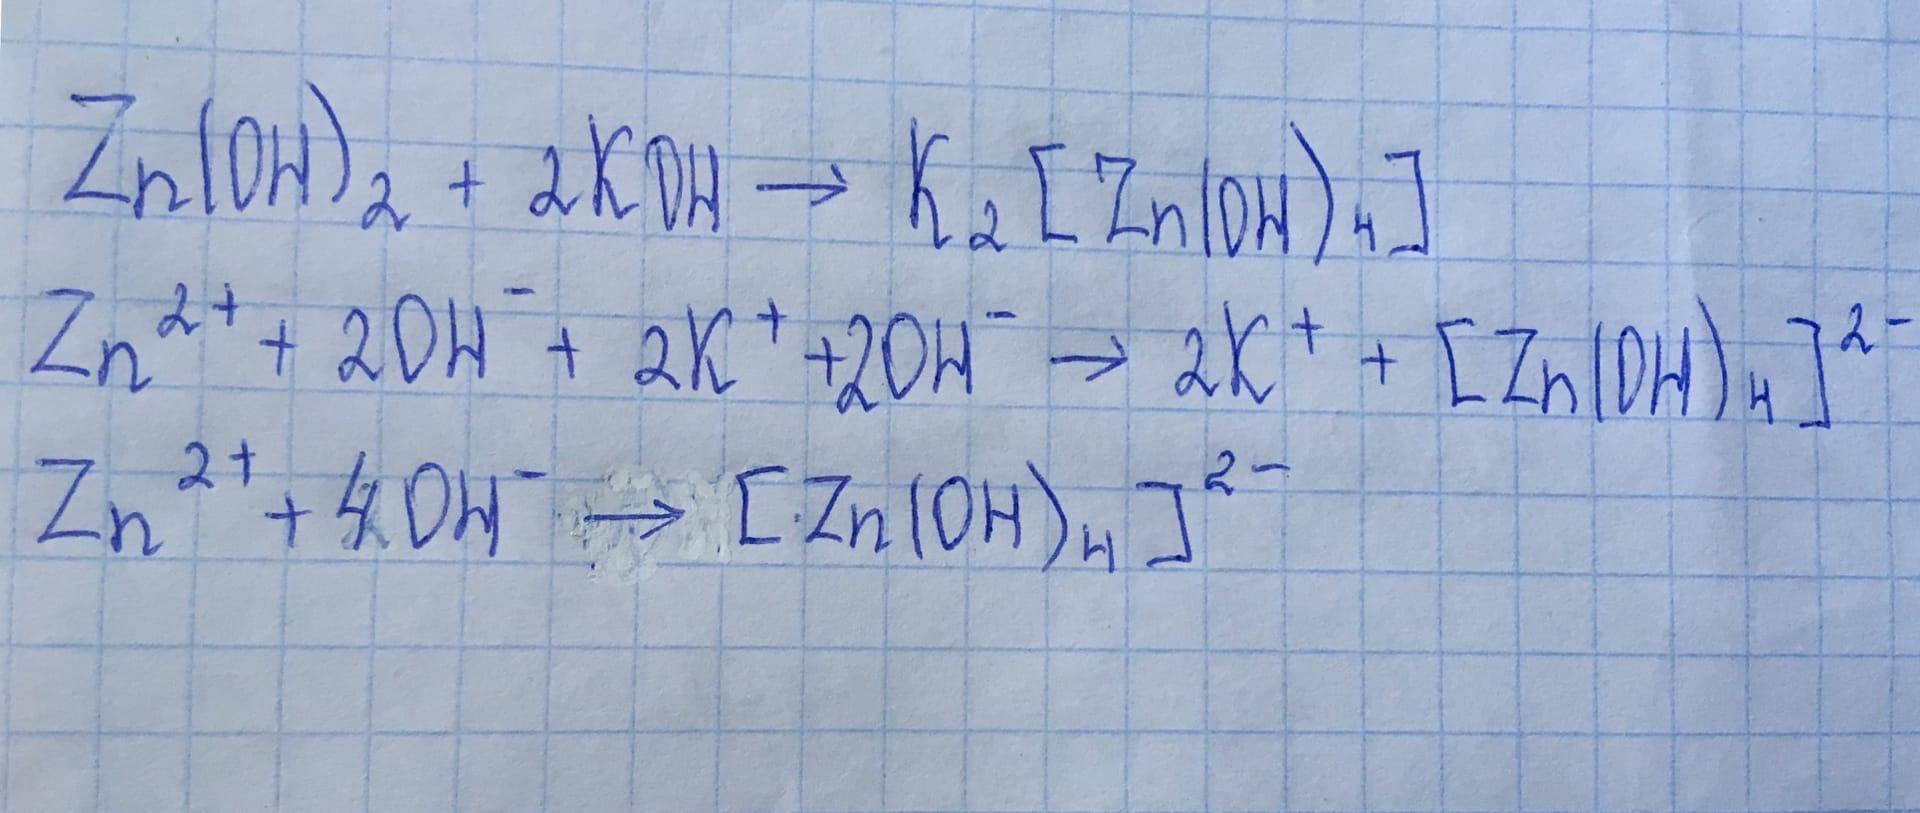 K zn oh 3. ZN Oh 2 реакции. ZN Oh 2 уравнение реакции. ZN сокращенное ионное. ZN Oh 2 ионное уравнение.